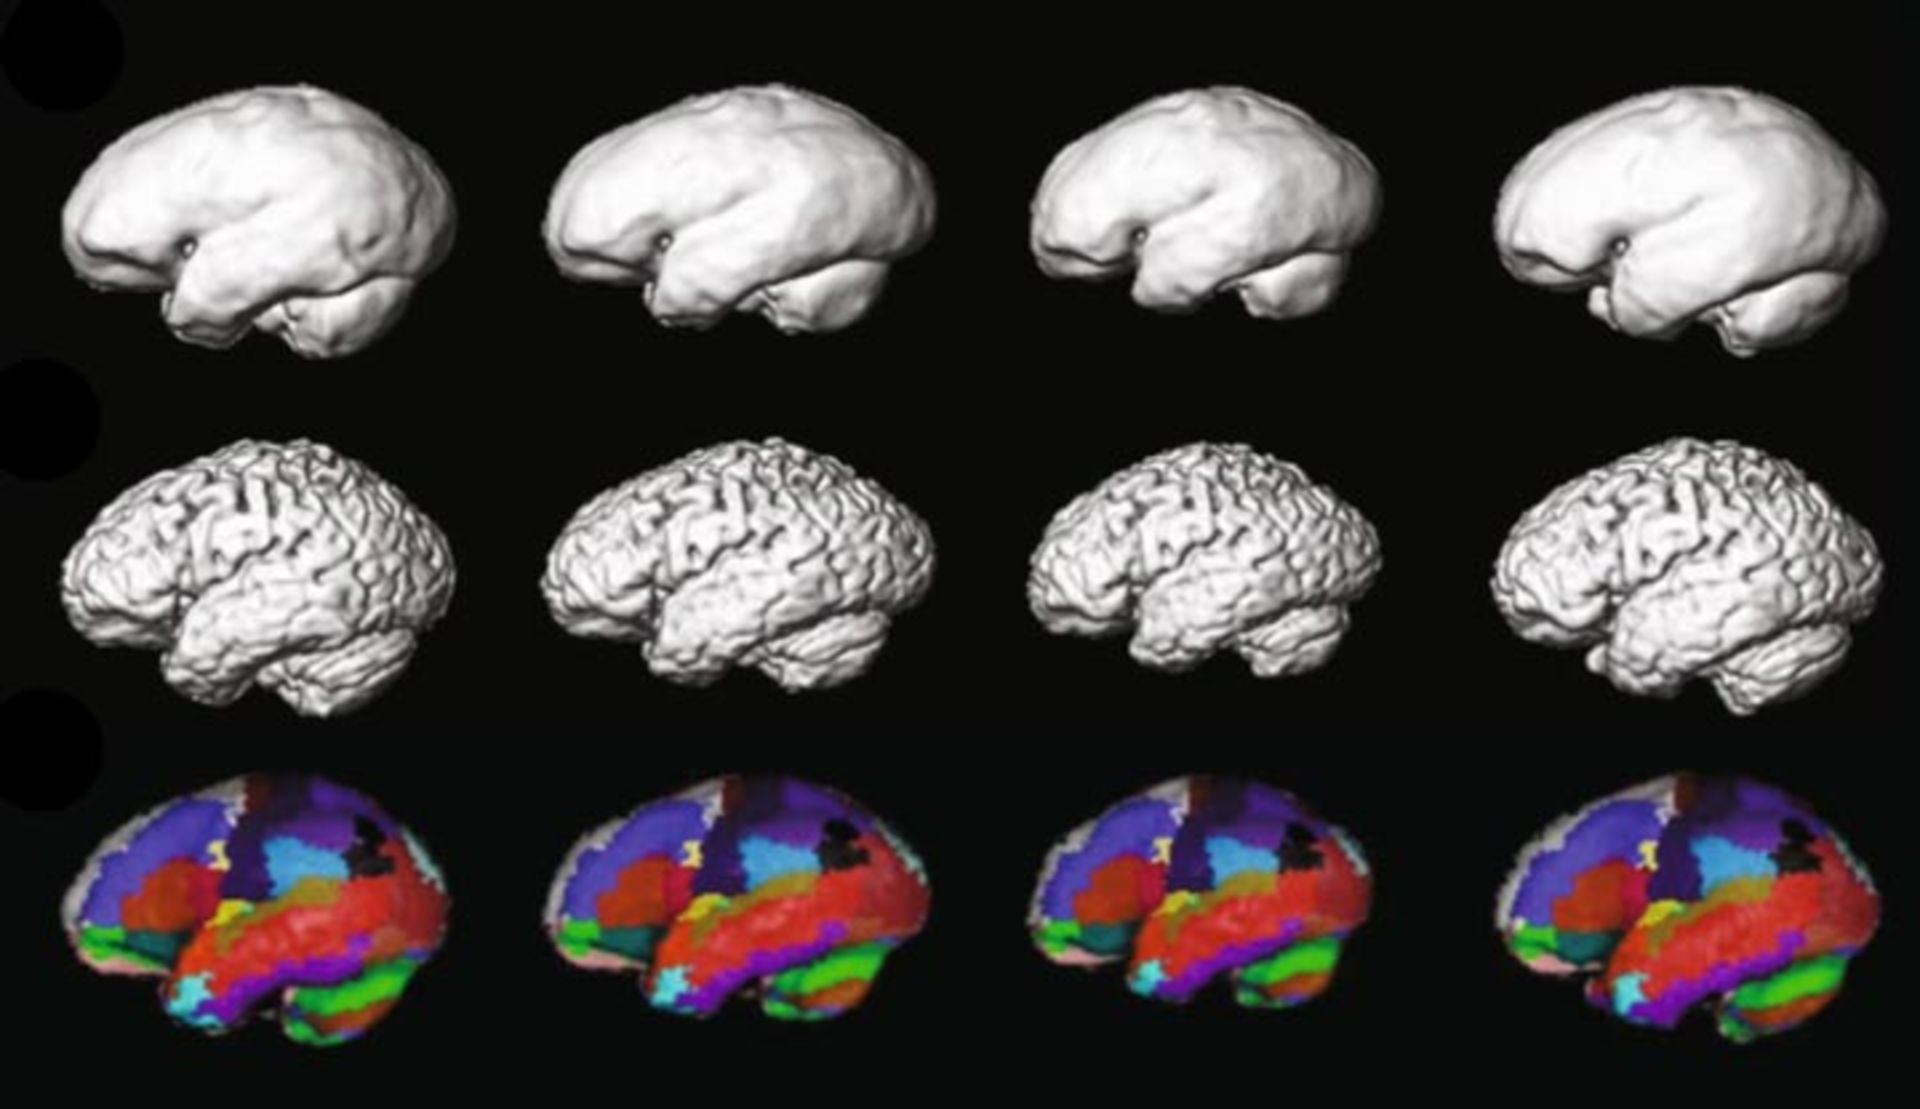 مرجع متخصصين ايران بازسازي كامپيوتري مغز نئاندرتال‌ها 